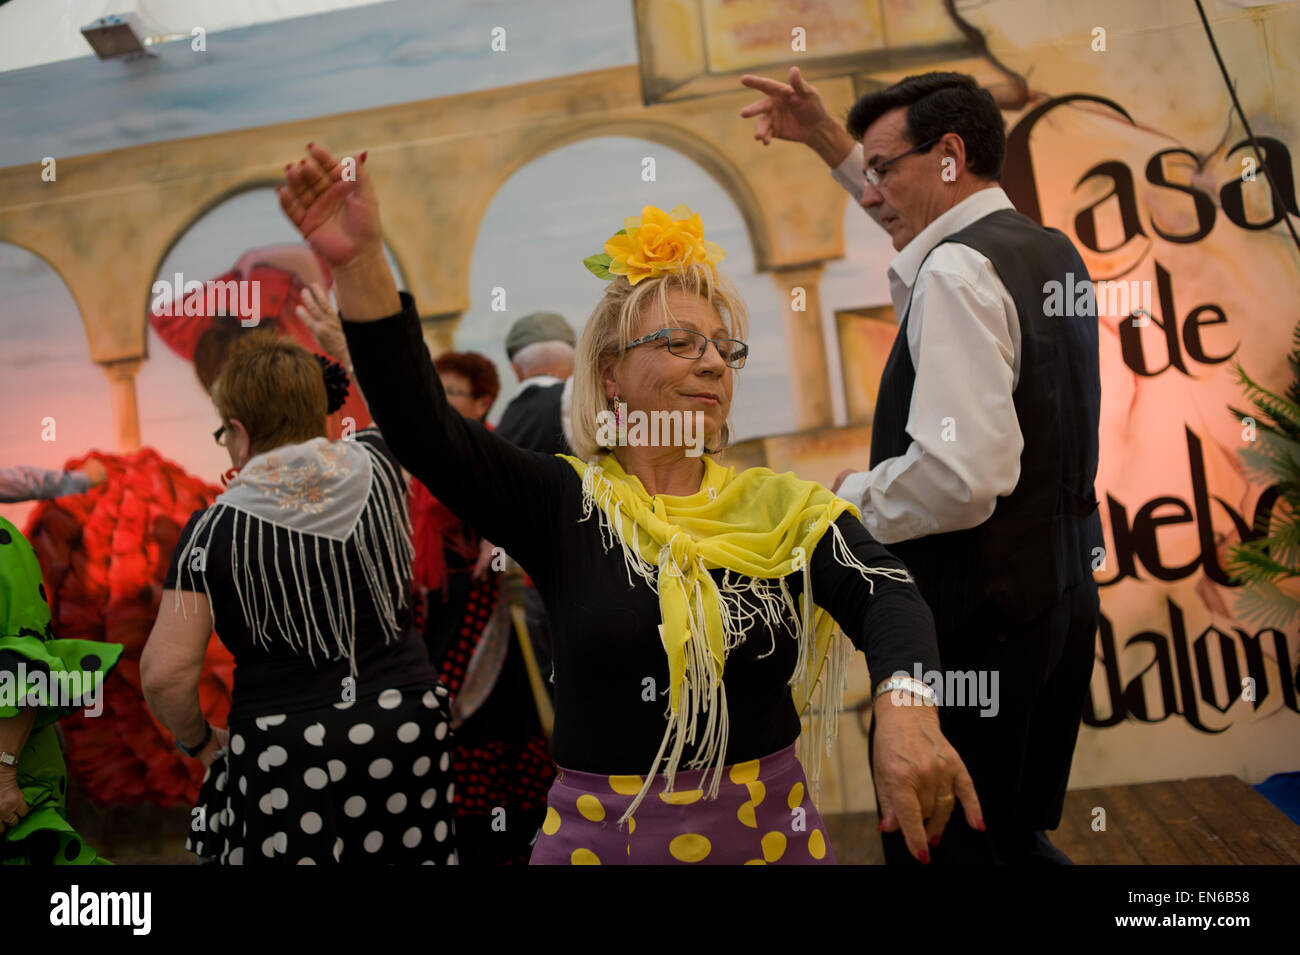 A woman dancing Sevillanas (Typical Andalusian dance) during la Feria de Abril in Barcelona. Stock Photo